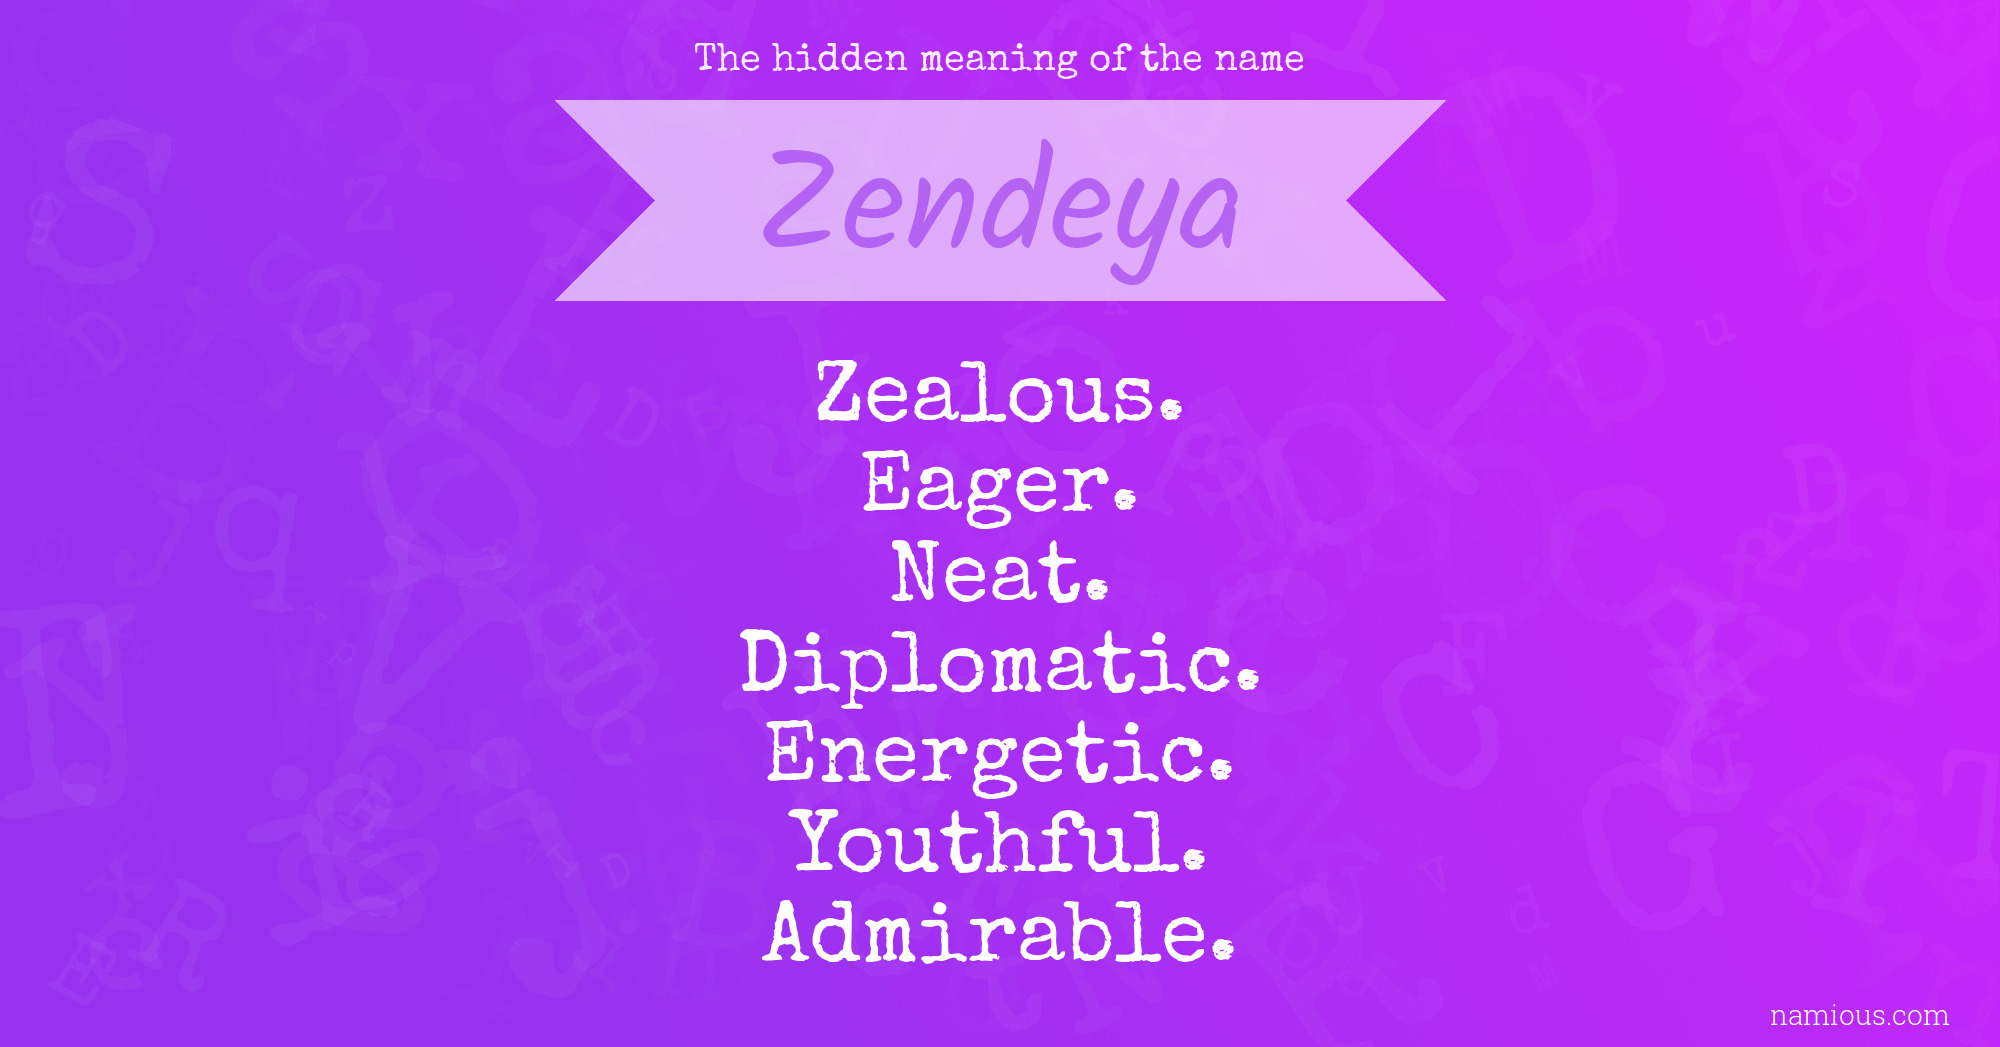 The hidden meaning of the name Zendeya